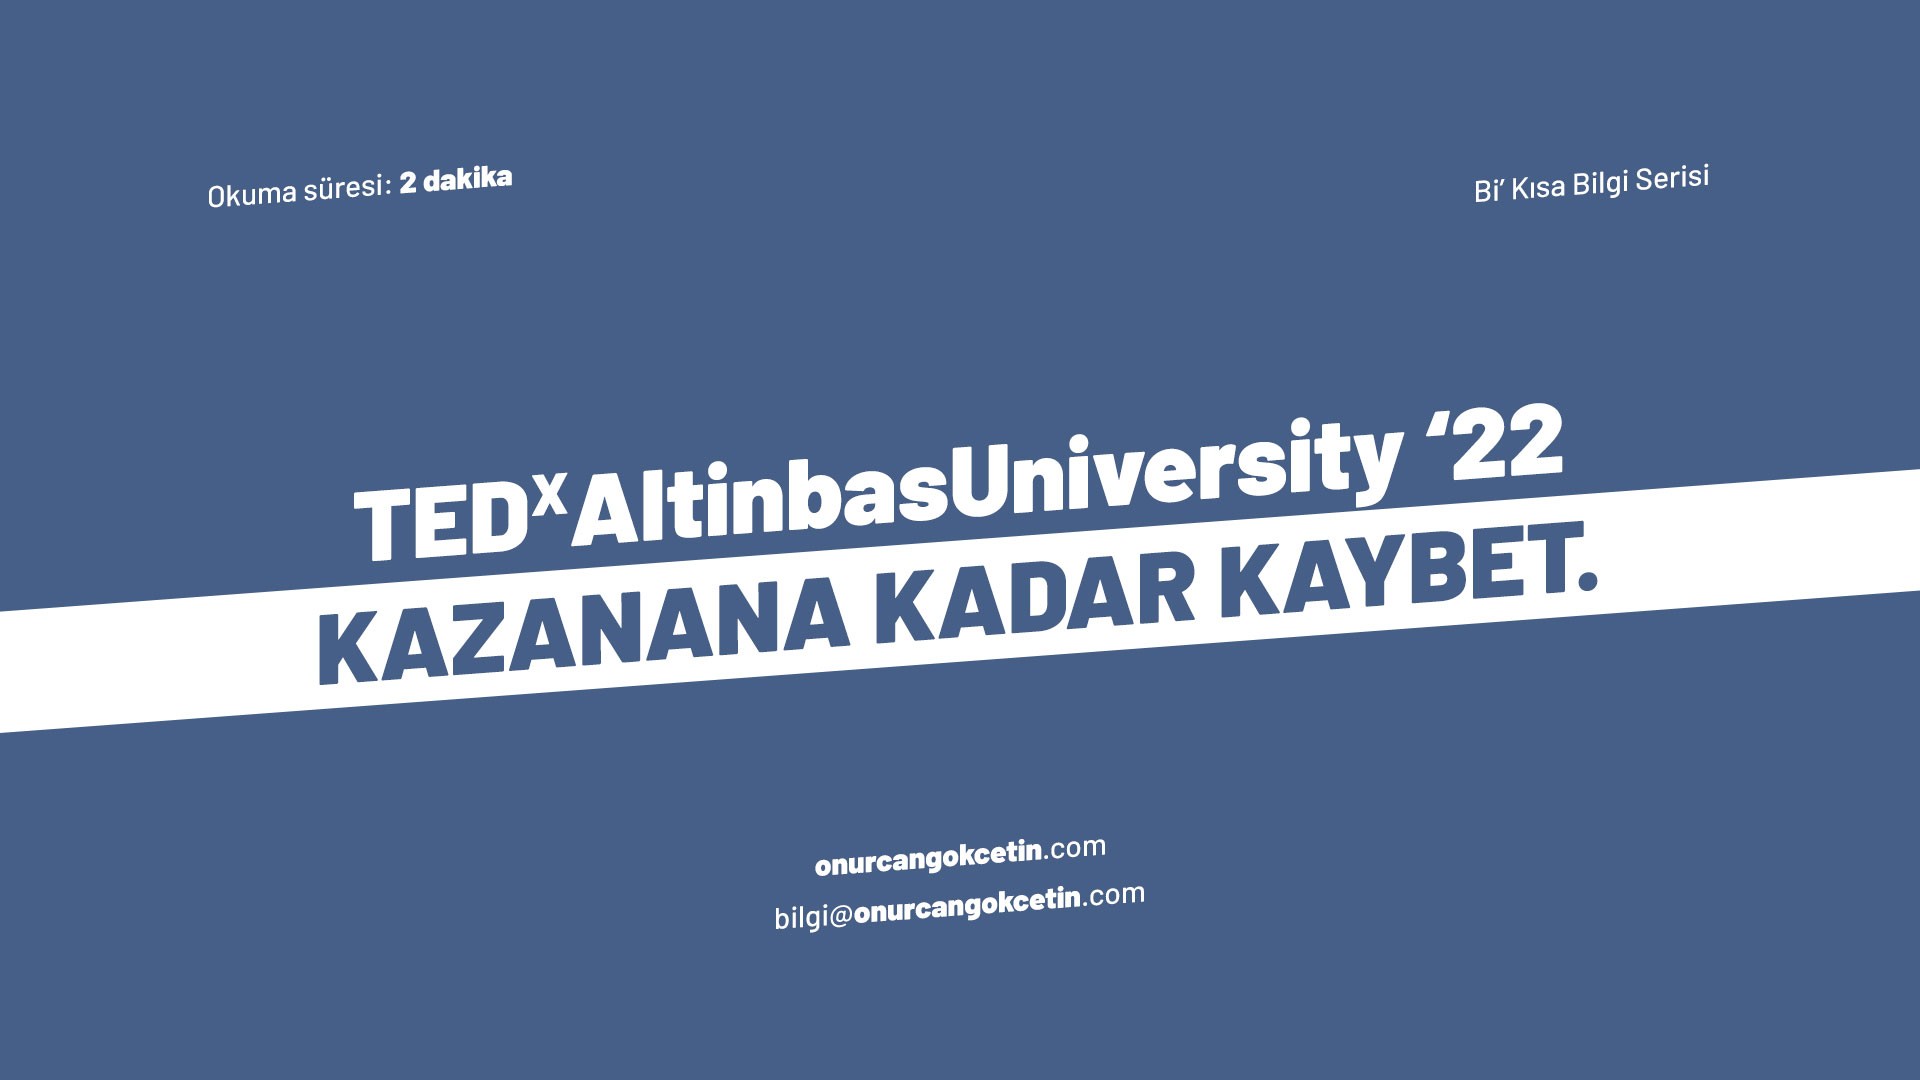 TEDxAltinbasUniversity Kazanana Kadar Kaybet